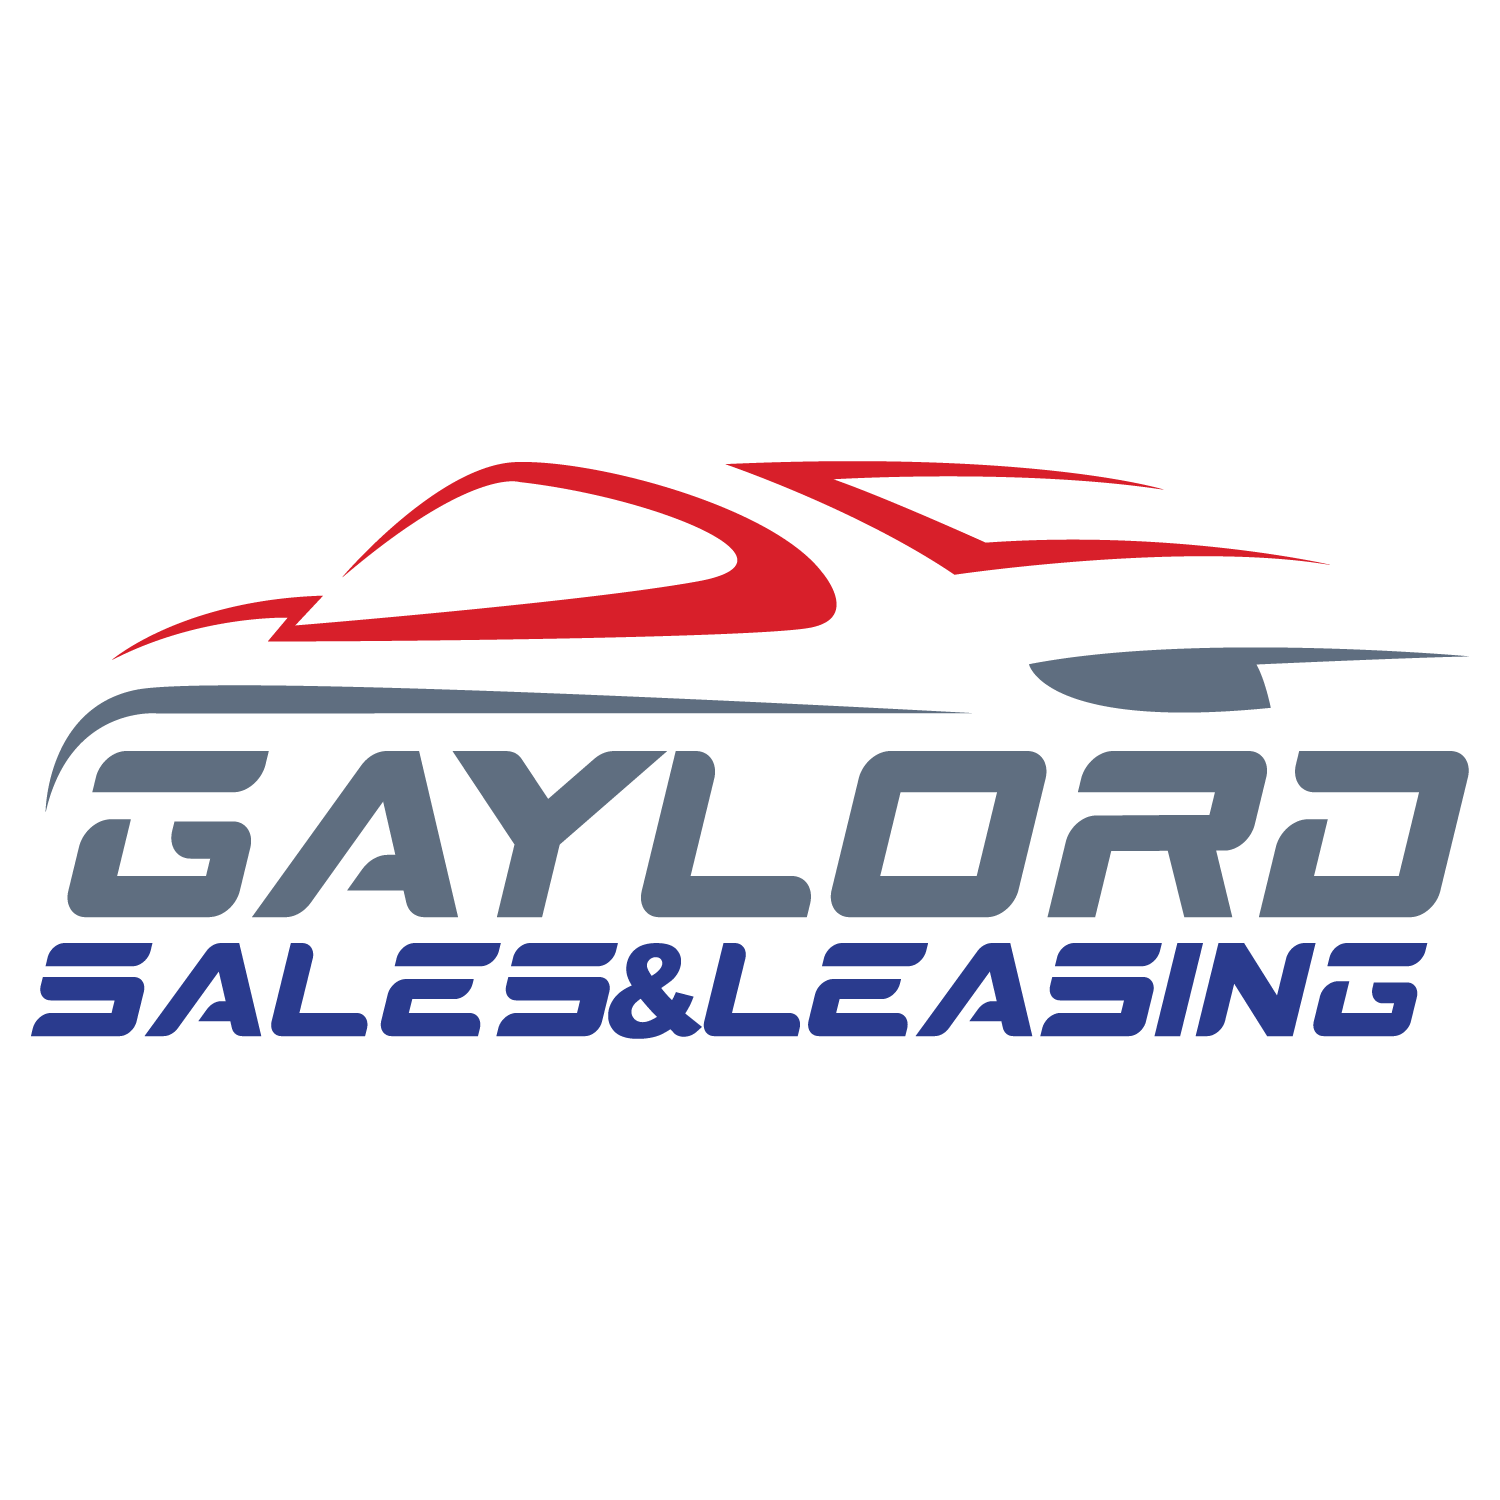 Gaylord Sales & Leasing